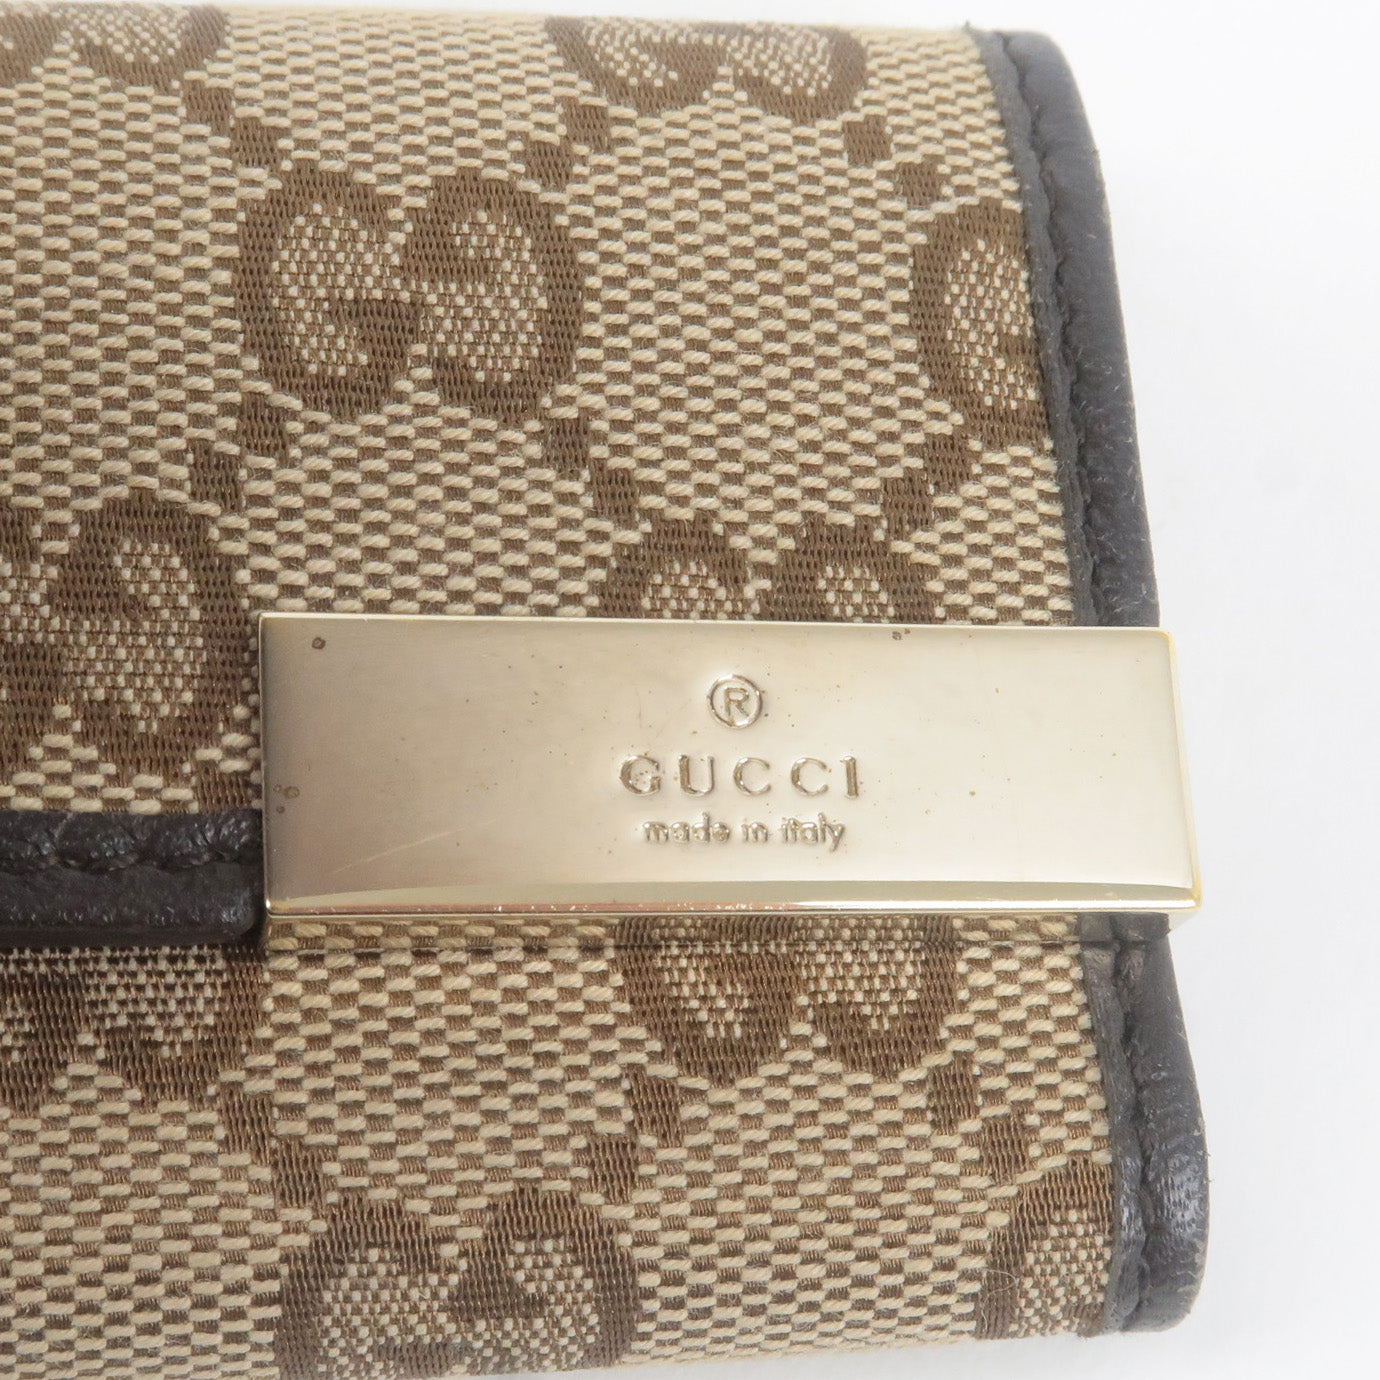 Gucci Vintage Beige GG Canvas Six-Key Case